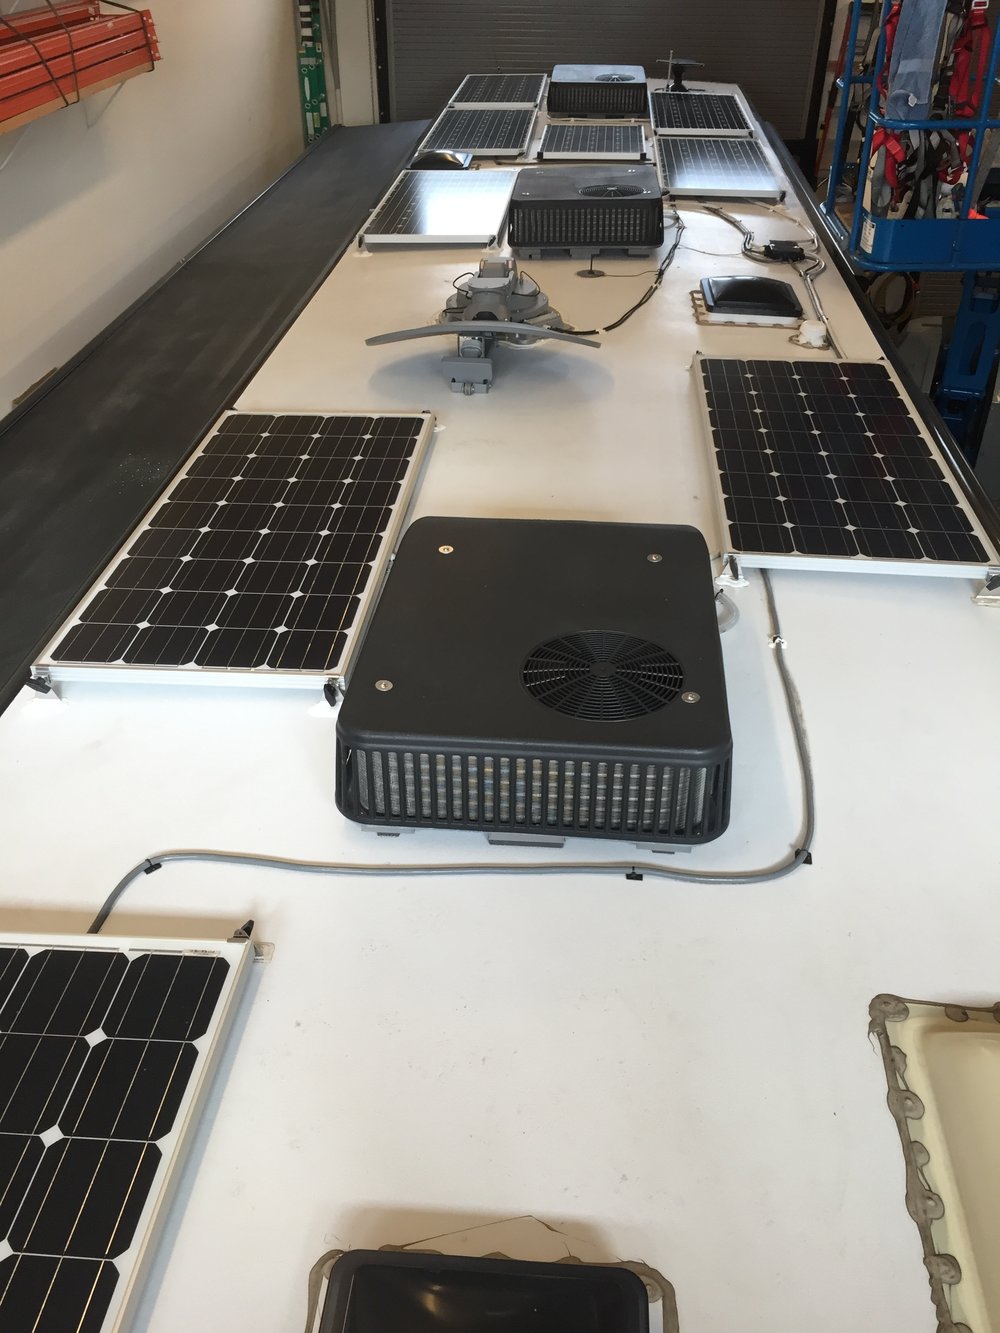 2/03/2017 - 2016 Monaco Diplomat, 44' solar panel wiring alternator 